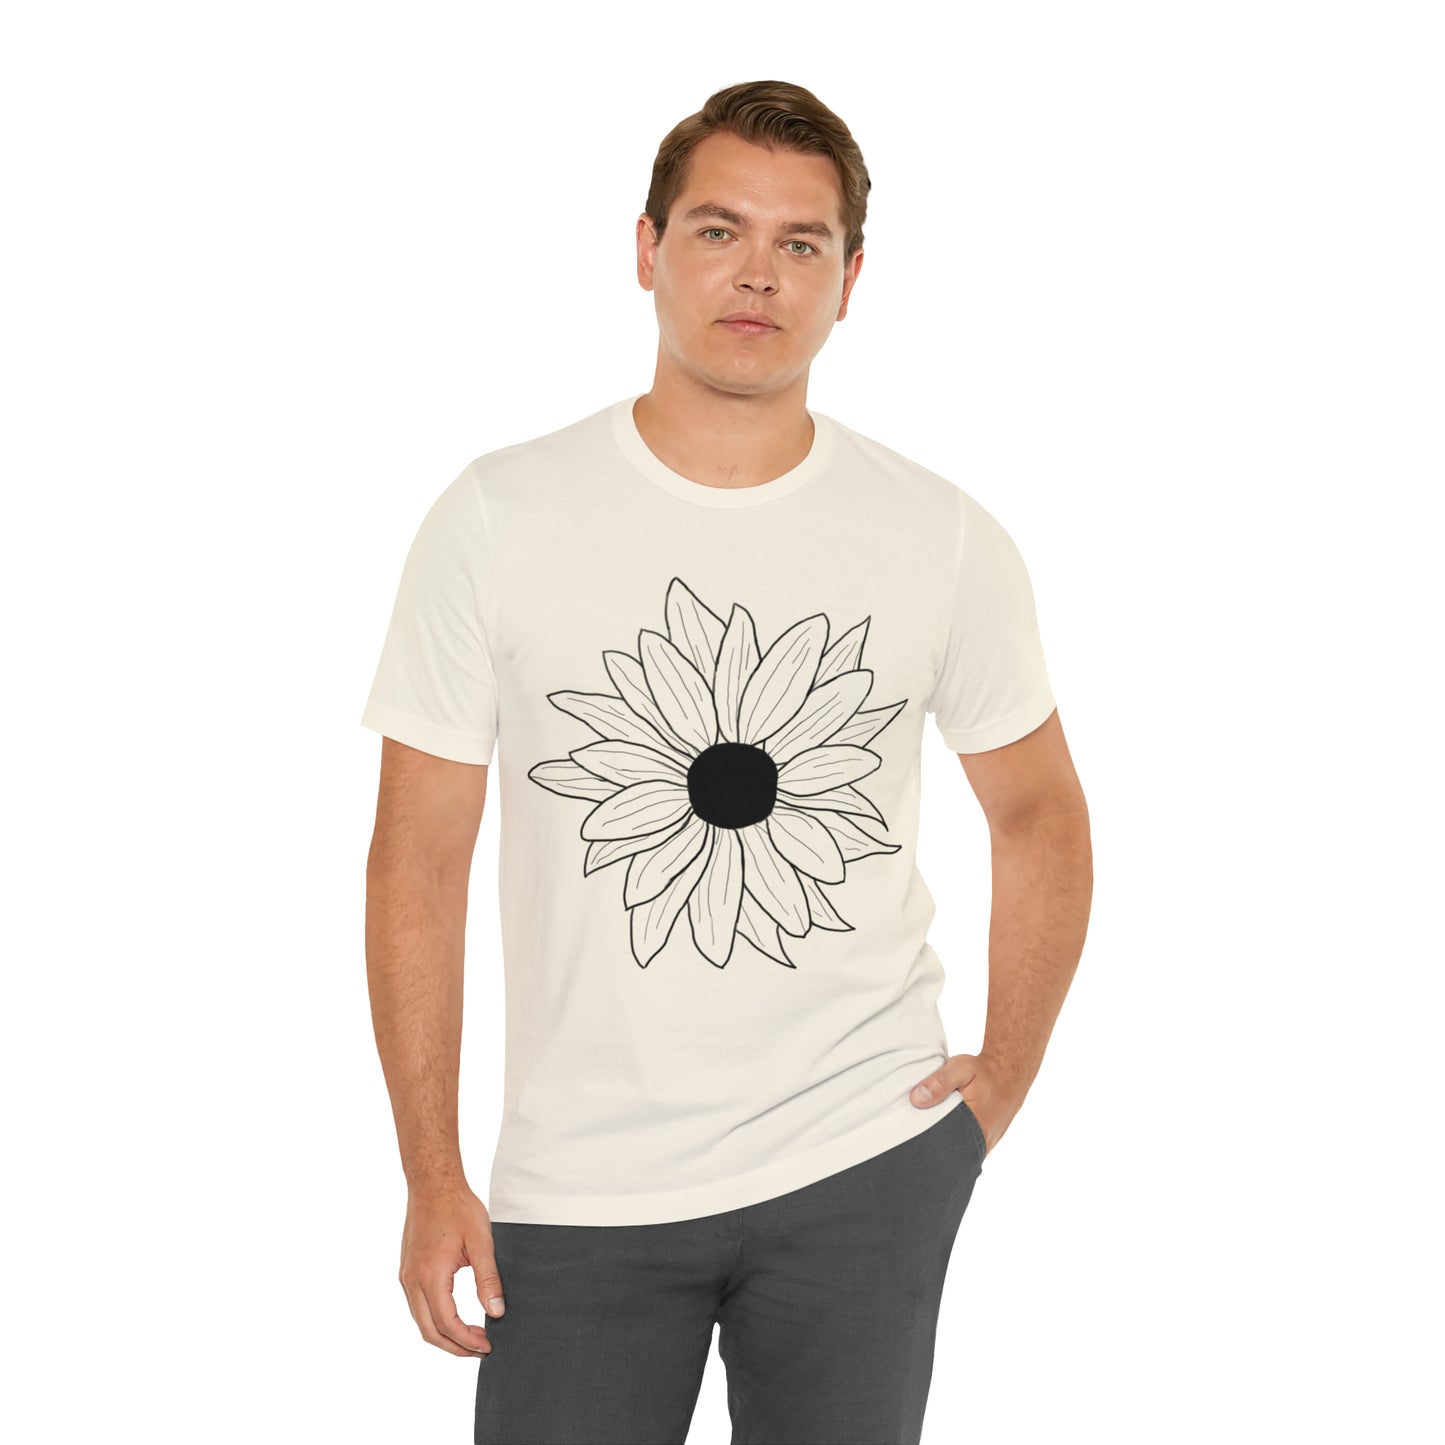 Daisey shirt, nature lover tshirt, hand-drawn, flower art, boho shirt, cottage core shirt, gift